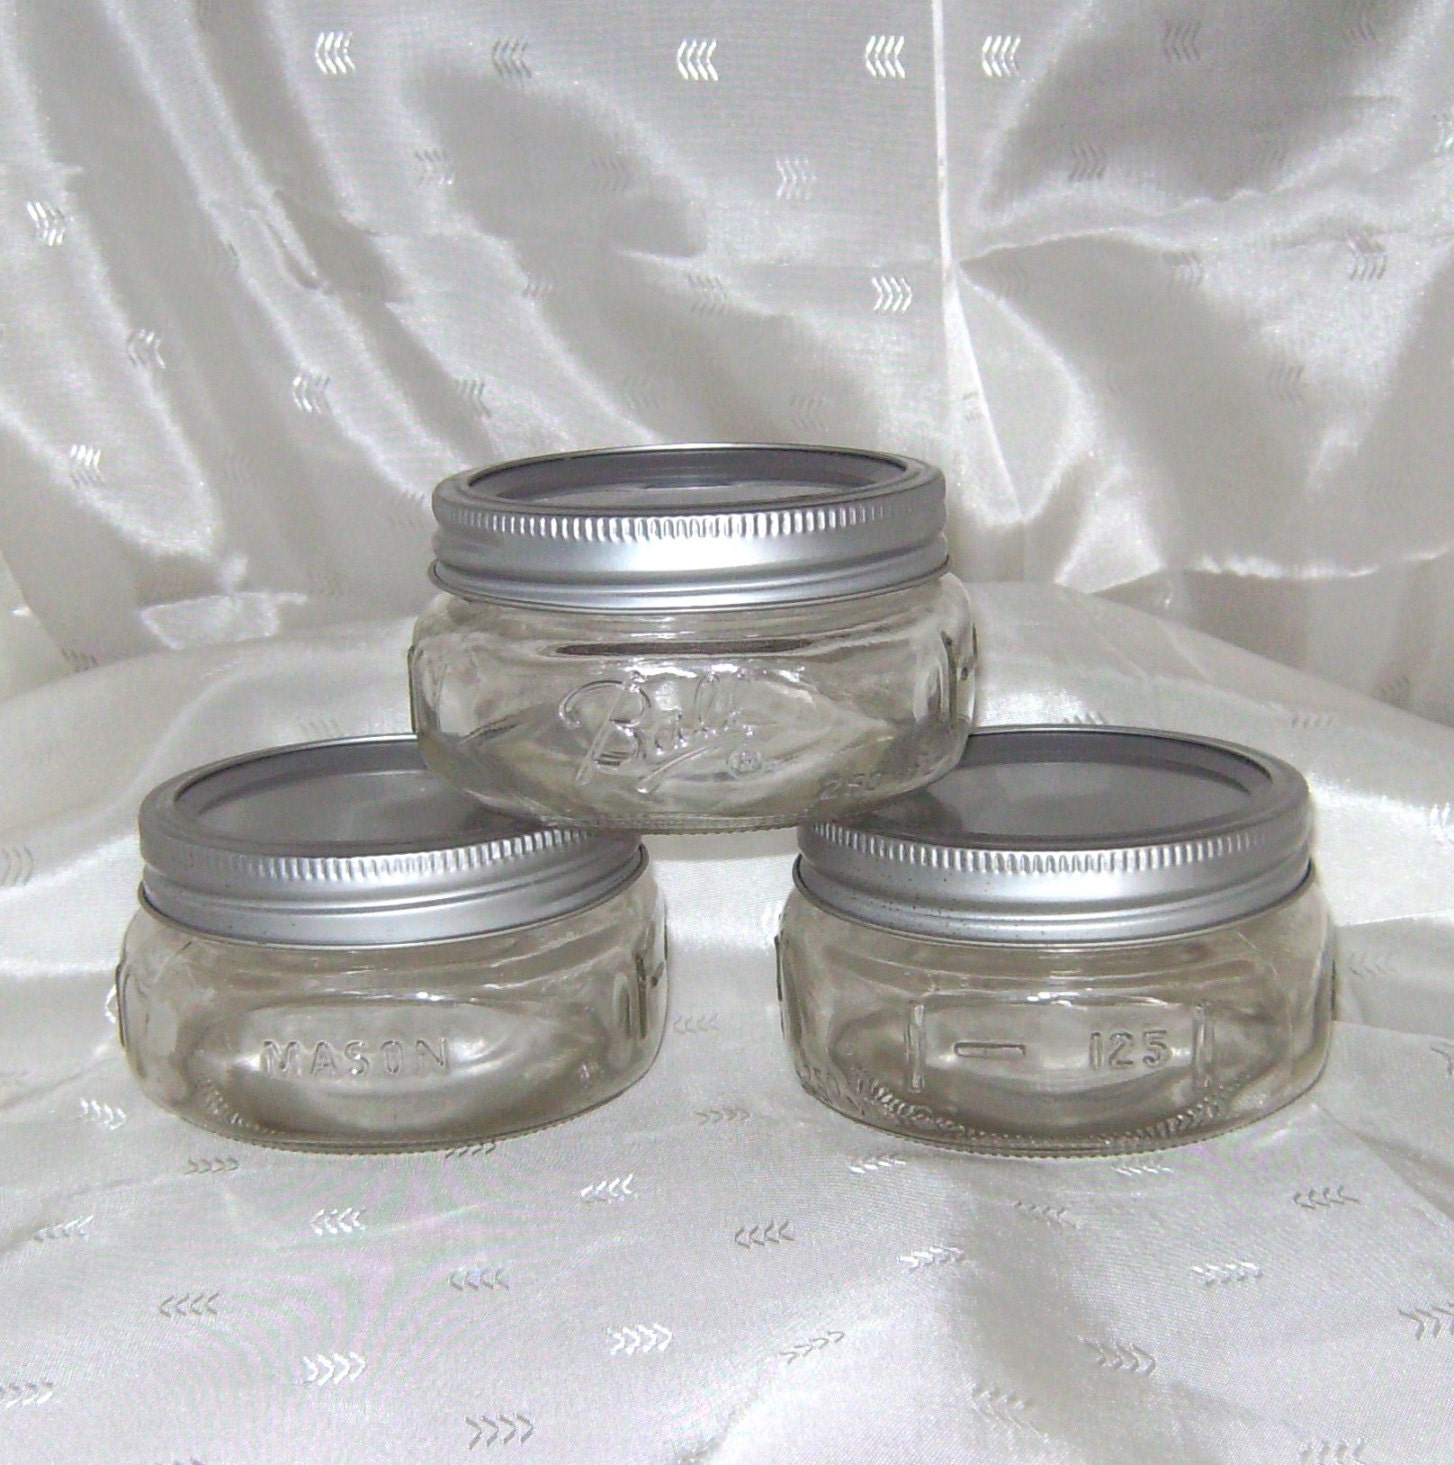 8 oz canning jars